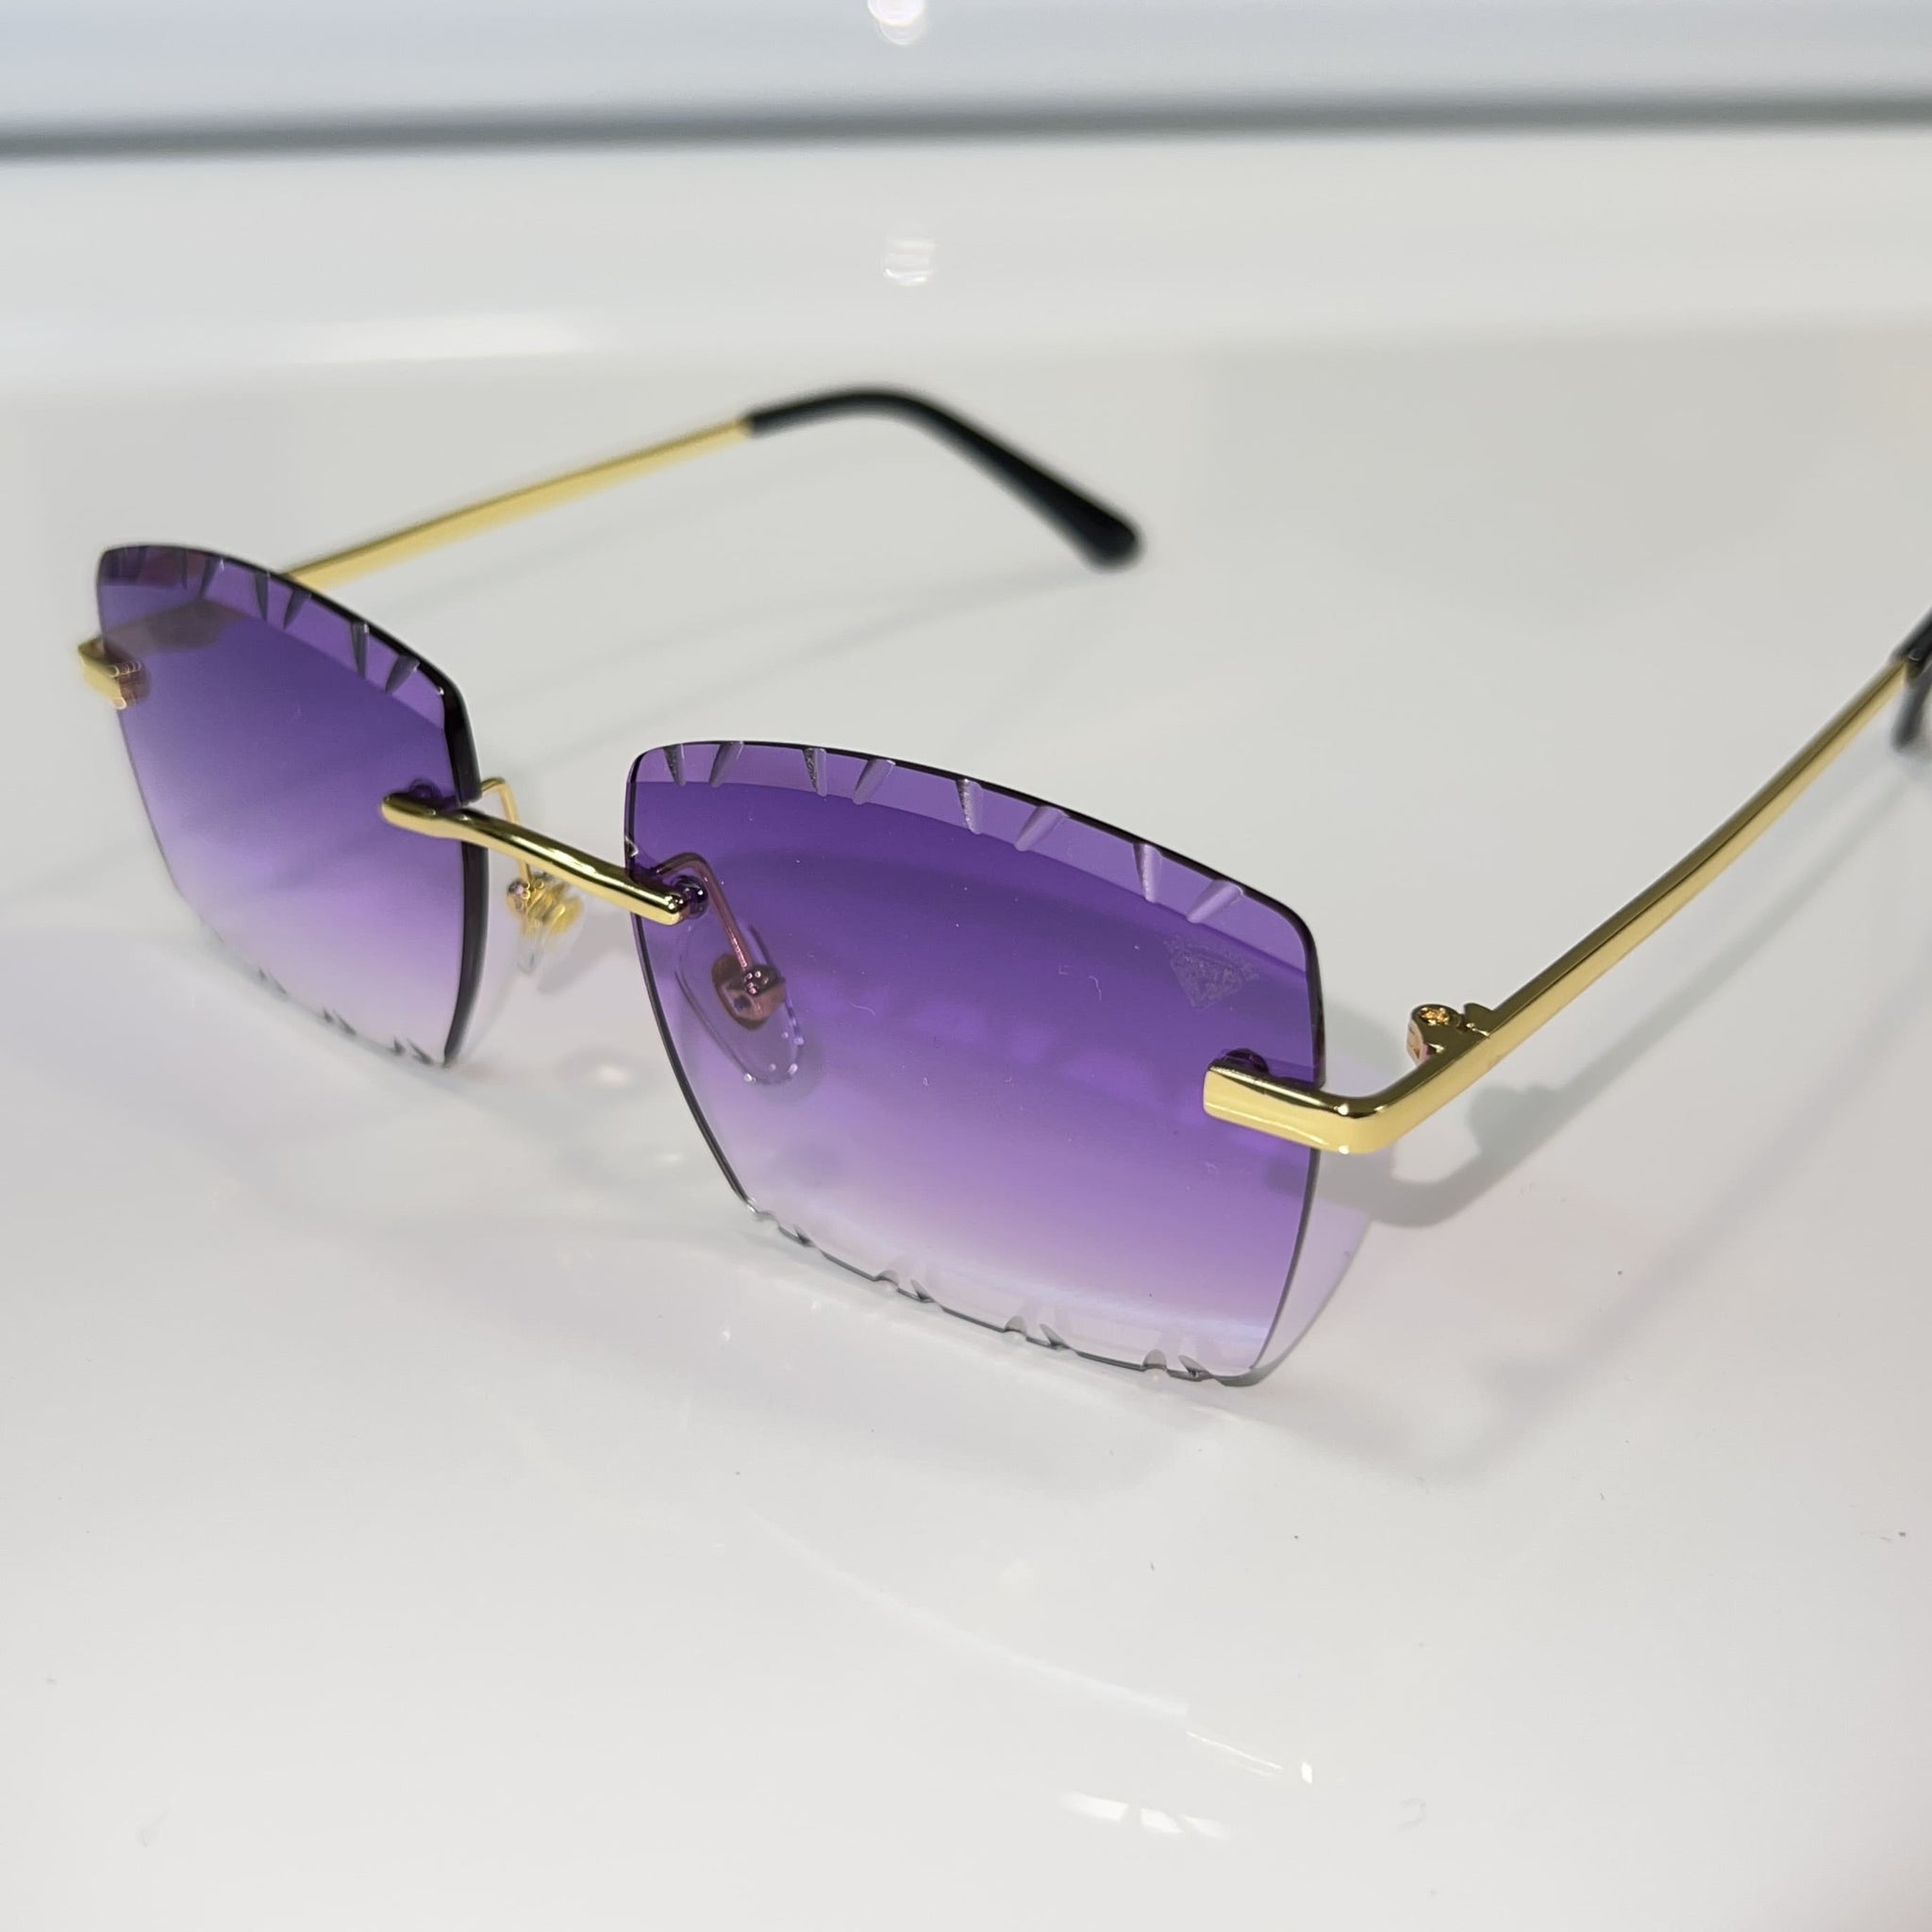 Dripcut Glasses - 14k gold plated - Purple Shade - Sehgal Glasses